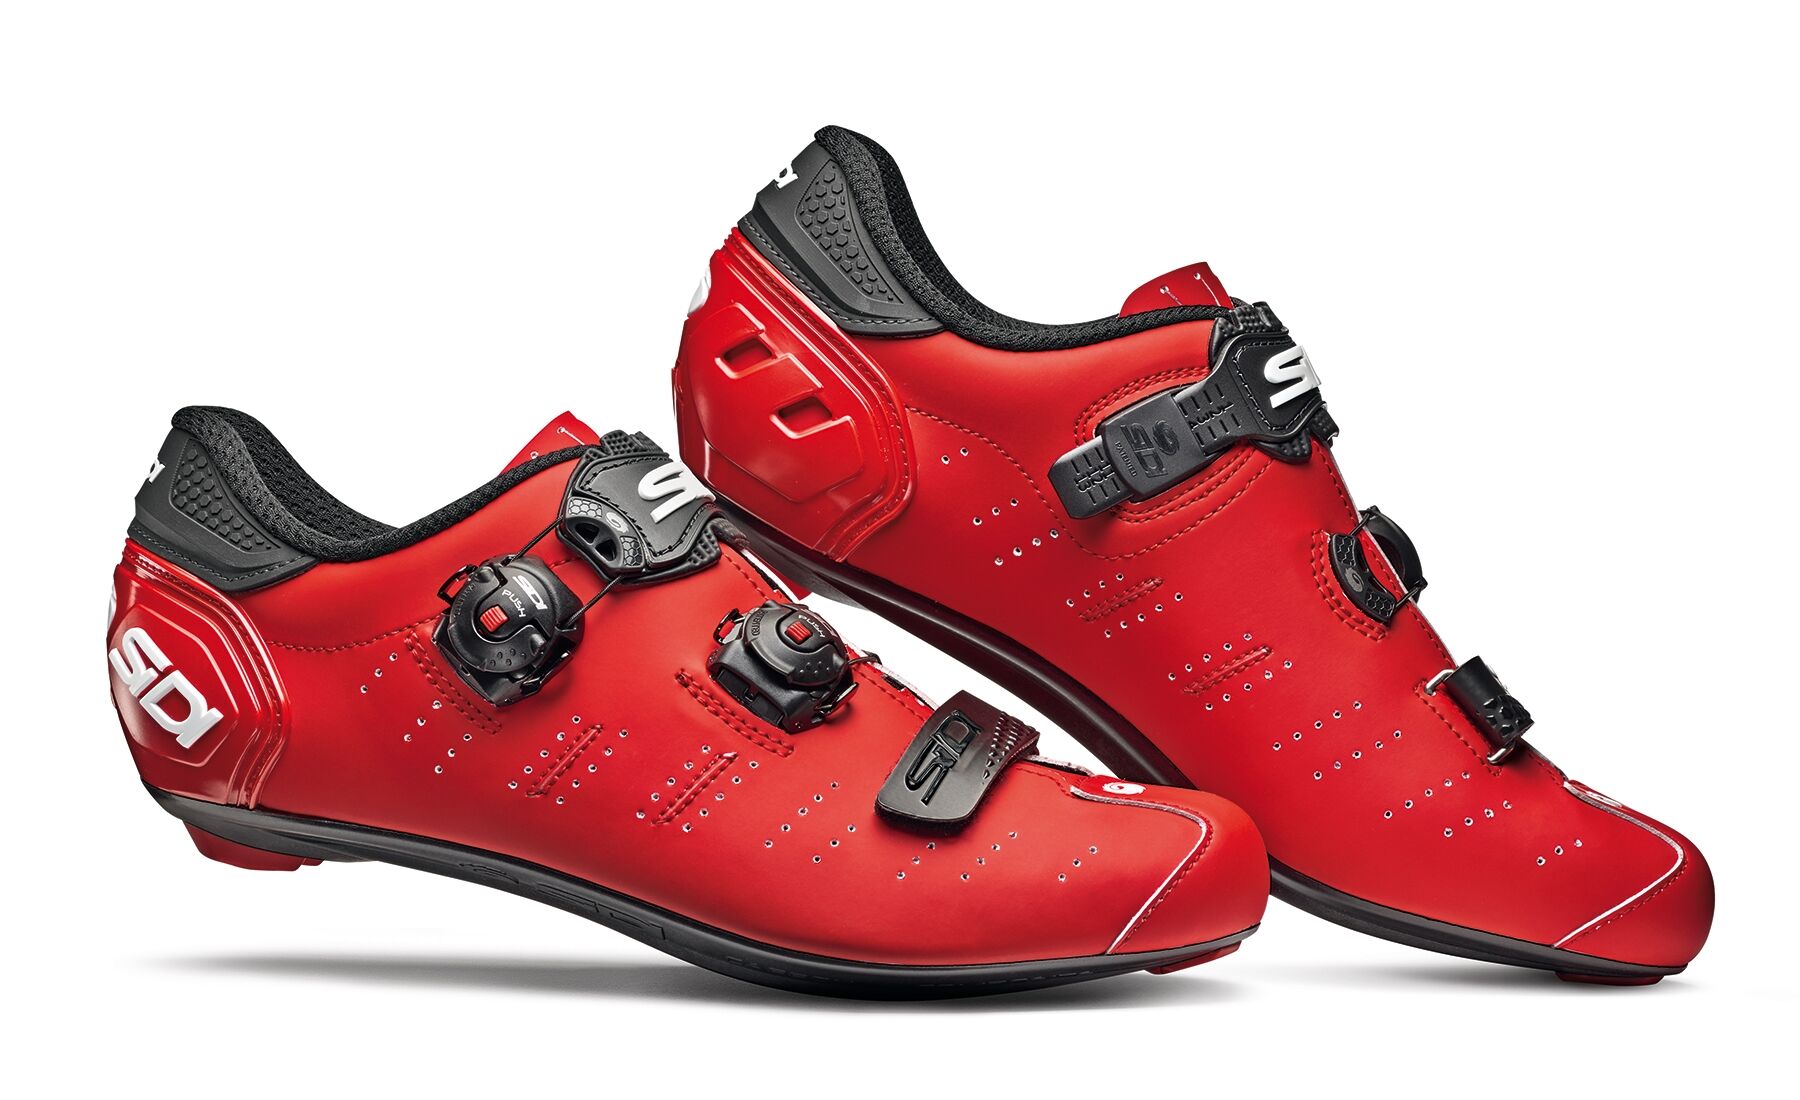 Sidi Ergo 5 - Cycling shoes - Men's